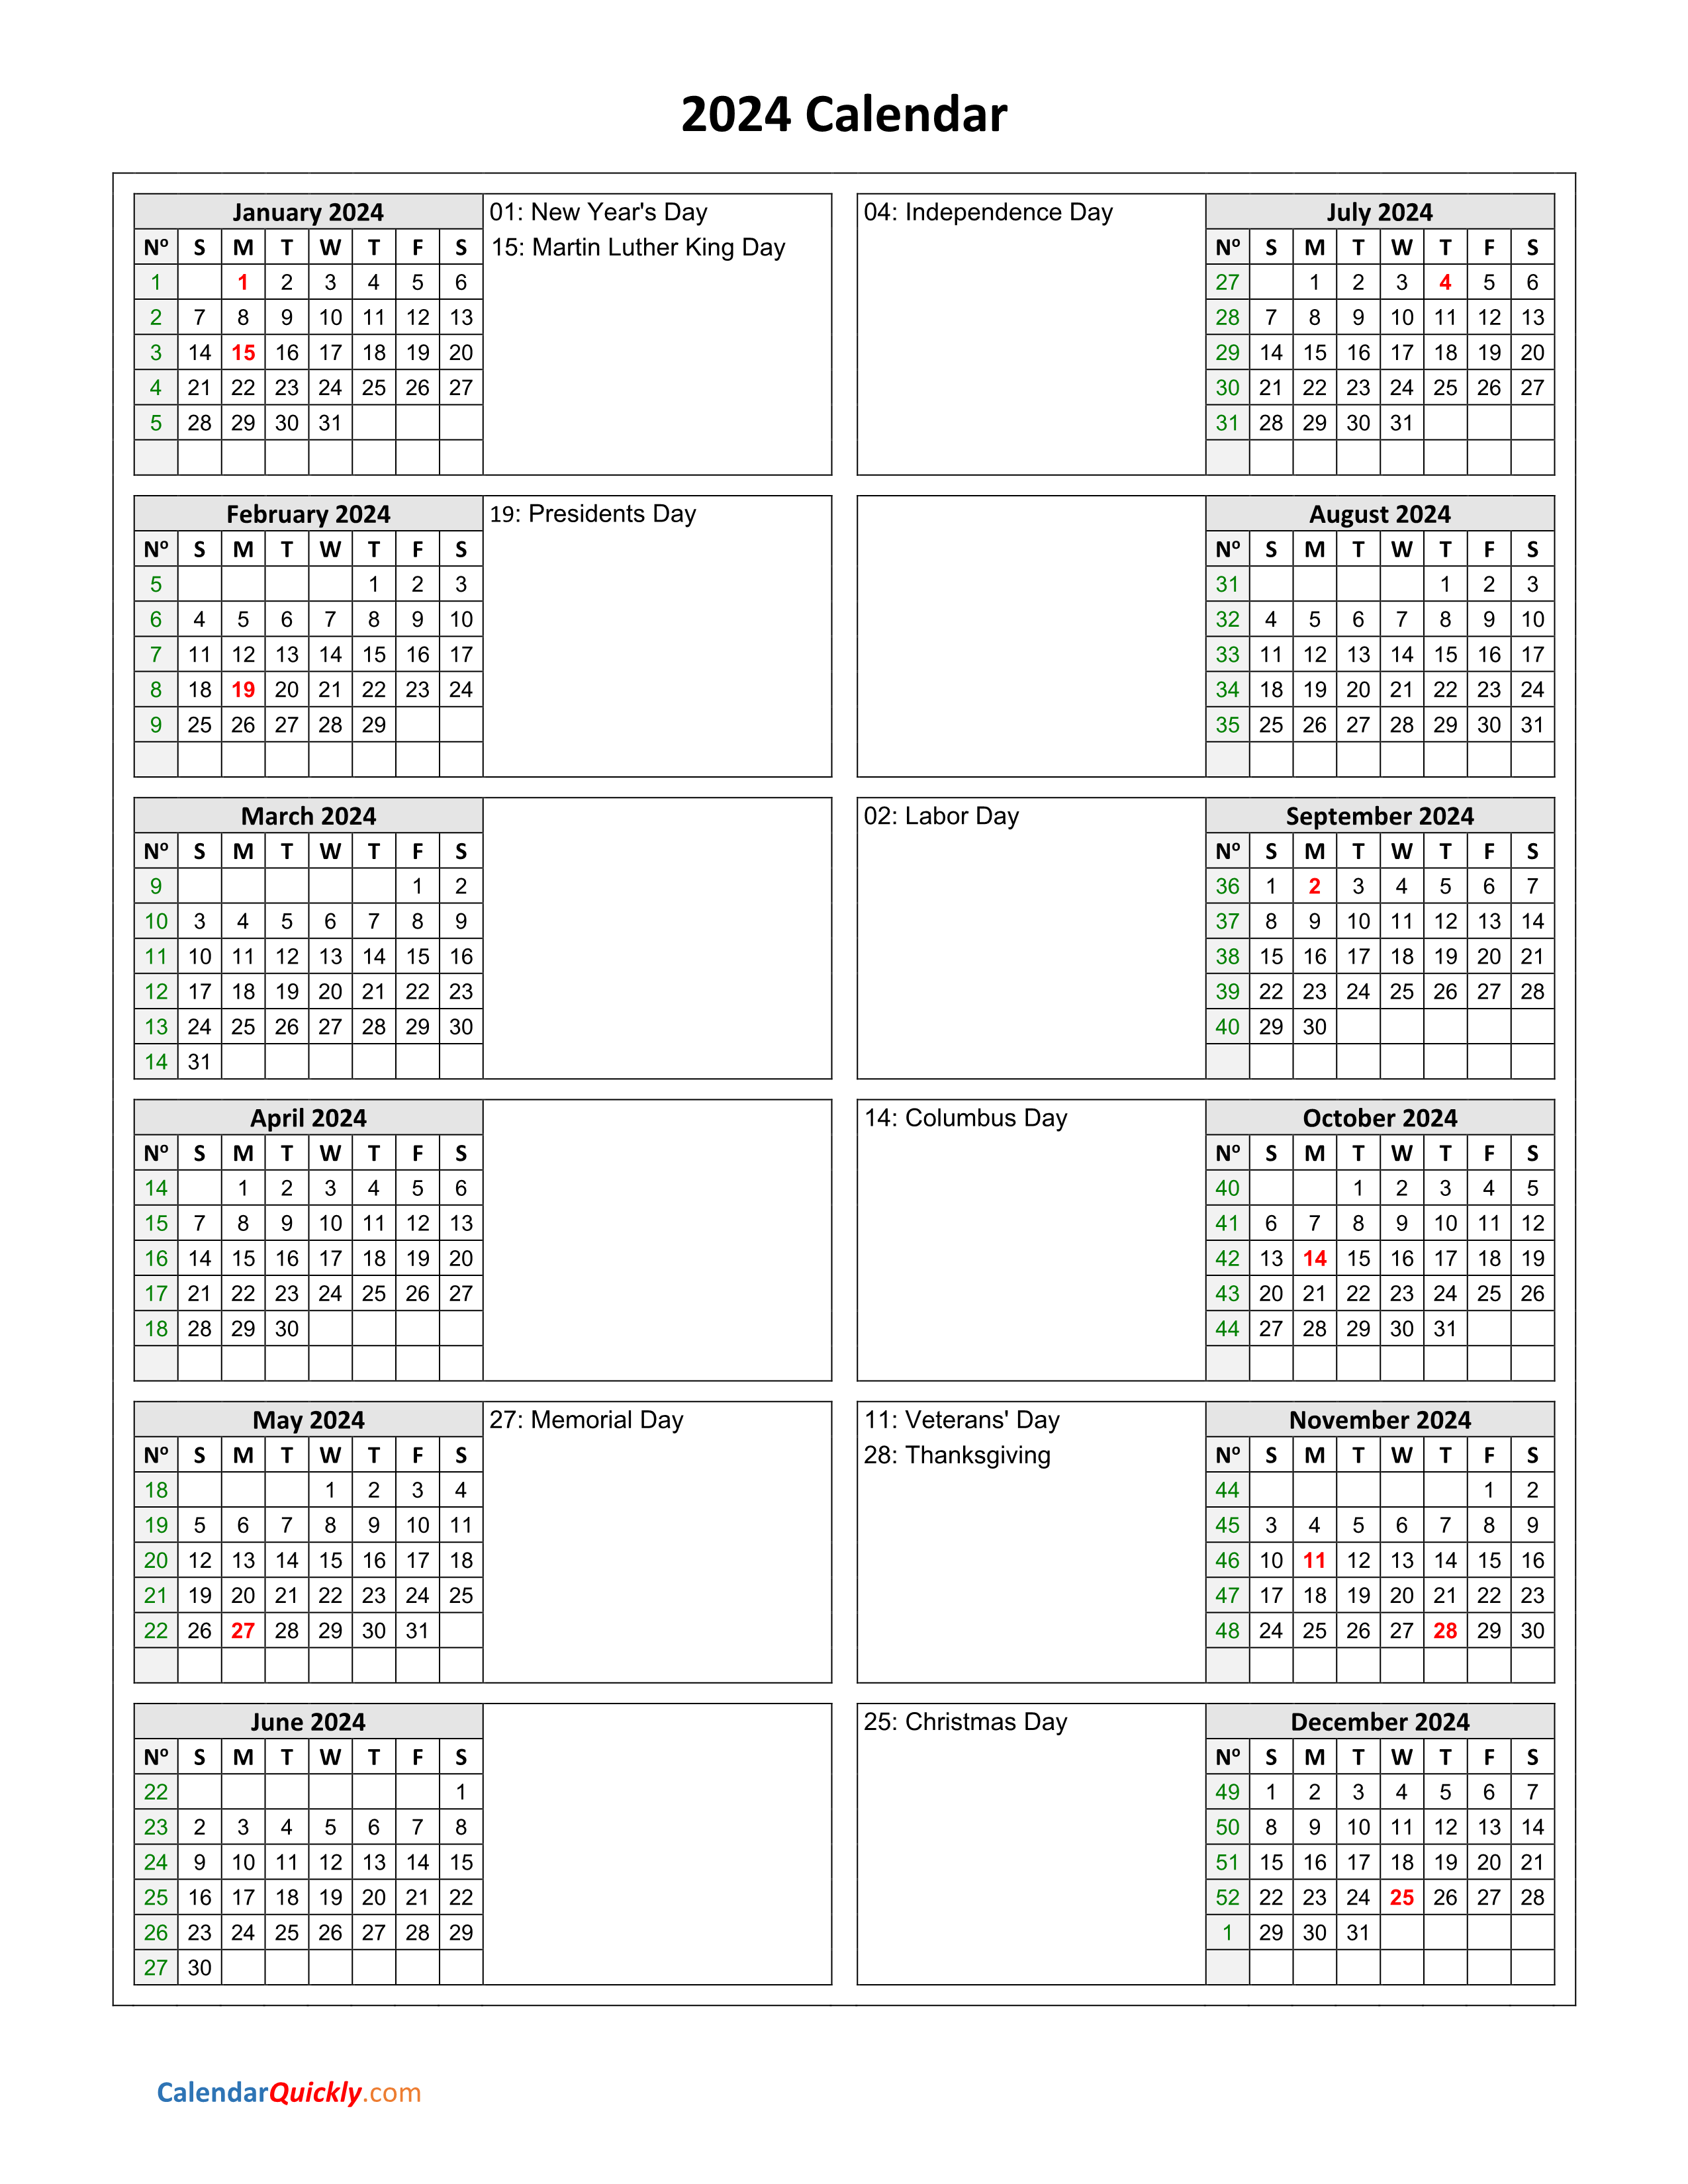 Holidays Calendar 2024 Vertical Calendar Quickly | Free Printable 2024 Vertical Calendar With Holidays